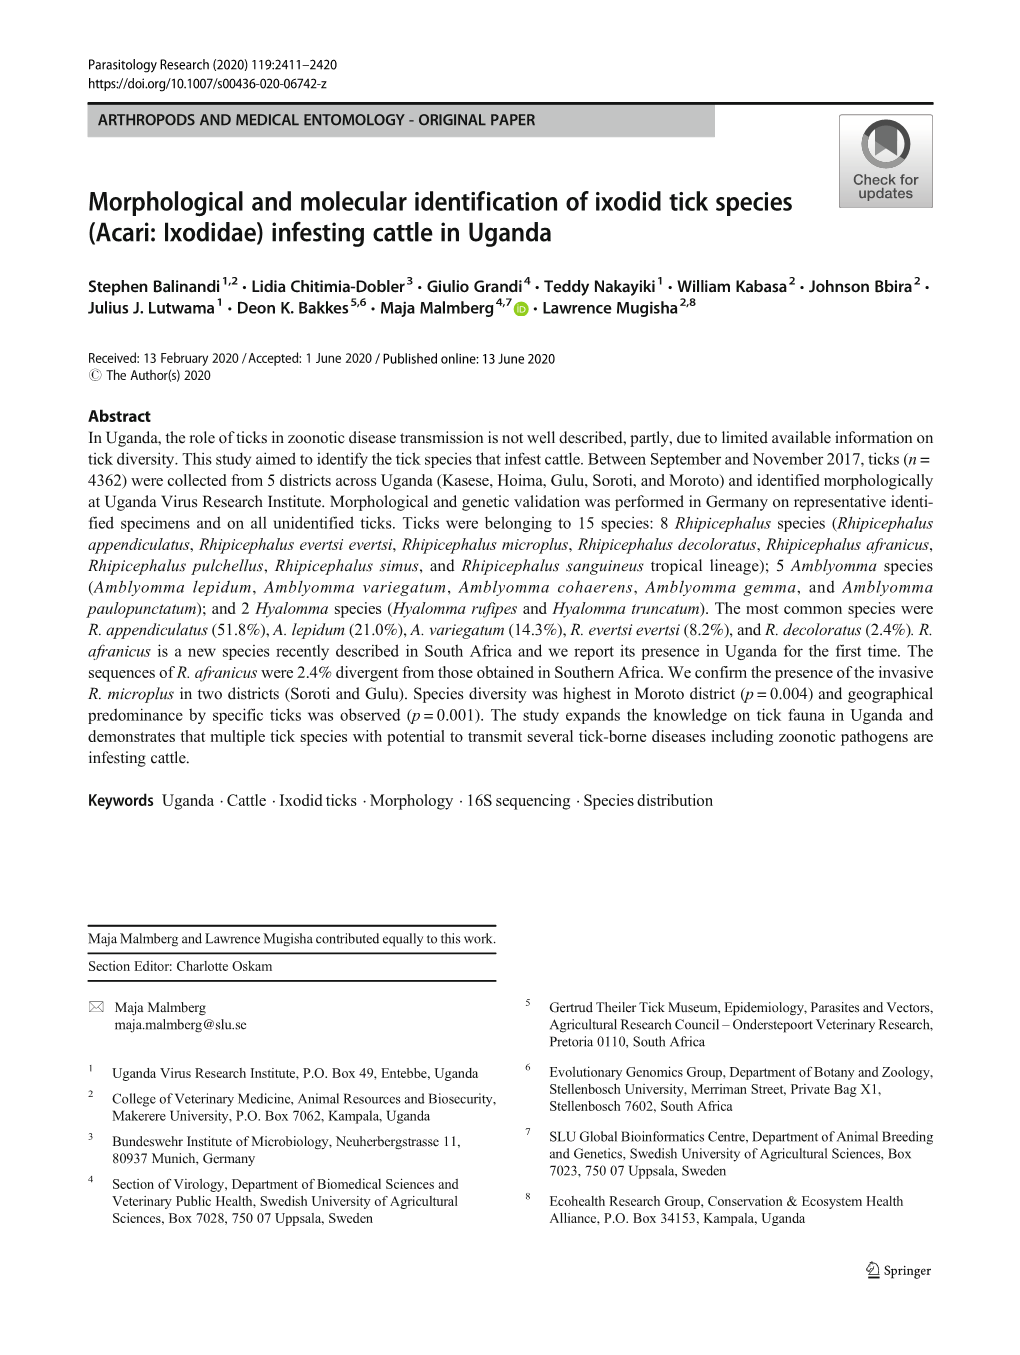 Morphological and Molecular Identification of Ixodid Tick Species (Acari: Ixodidae) Infesting Cattle in Uganda